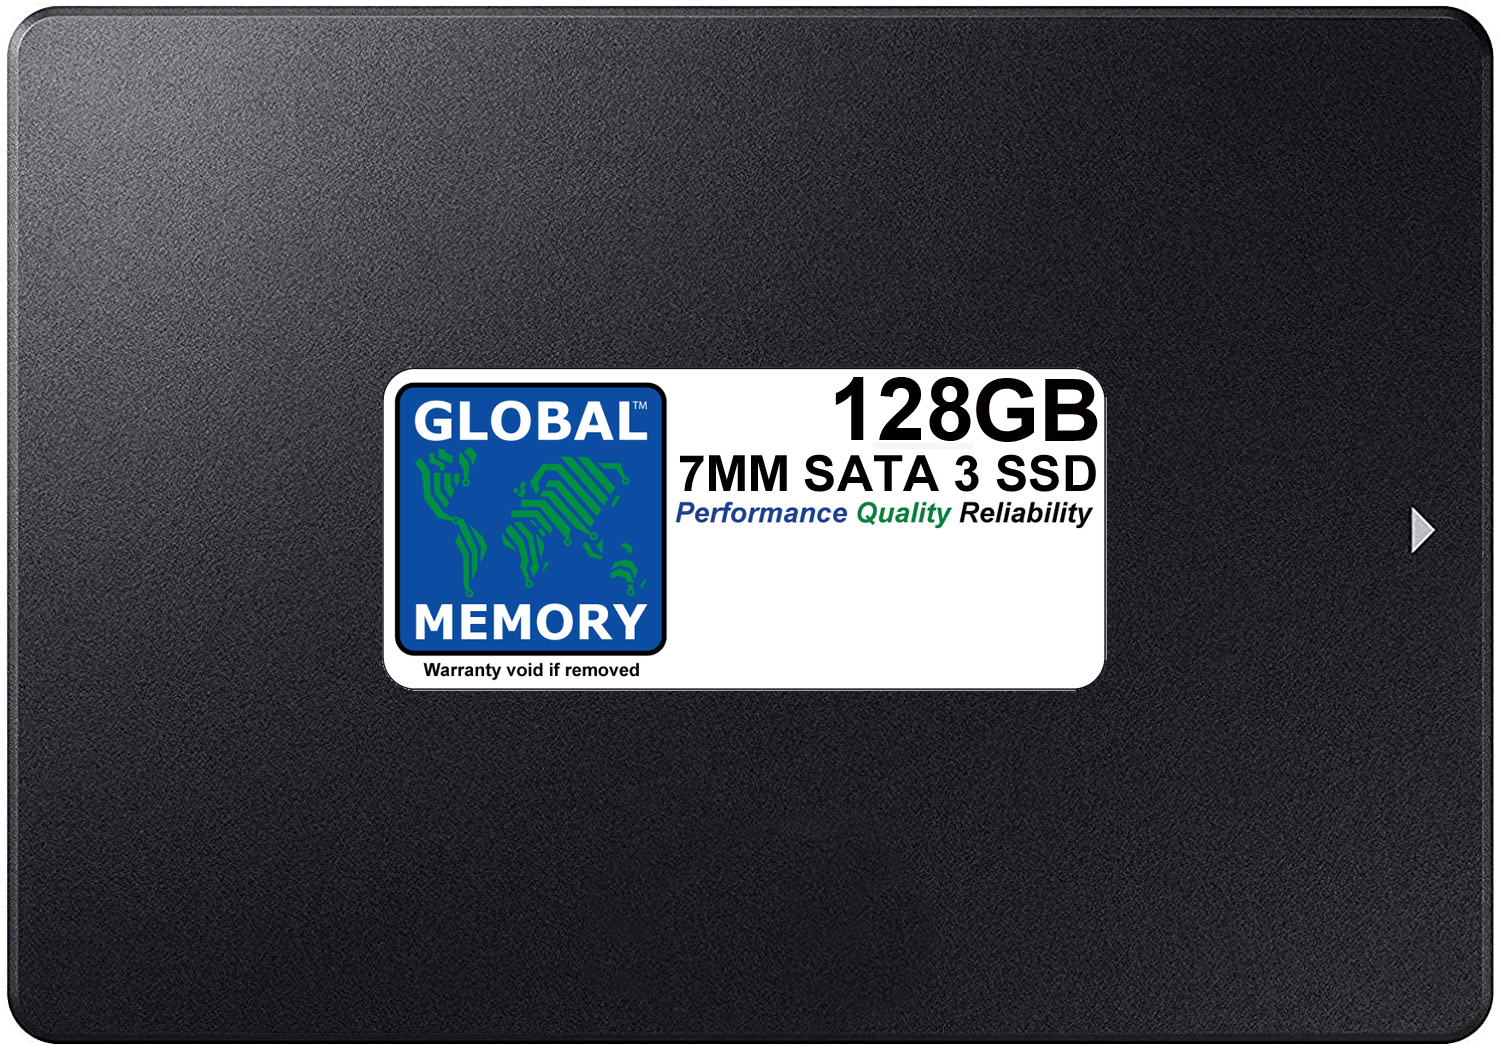 128GB 7mm 2.5" SATA 3 SSD FOR LAPTOPS / DESKTOP PCs / SERVERS / WORKSTATIONS - Click Image to Close